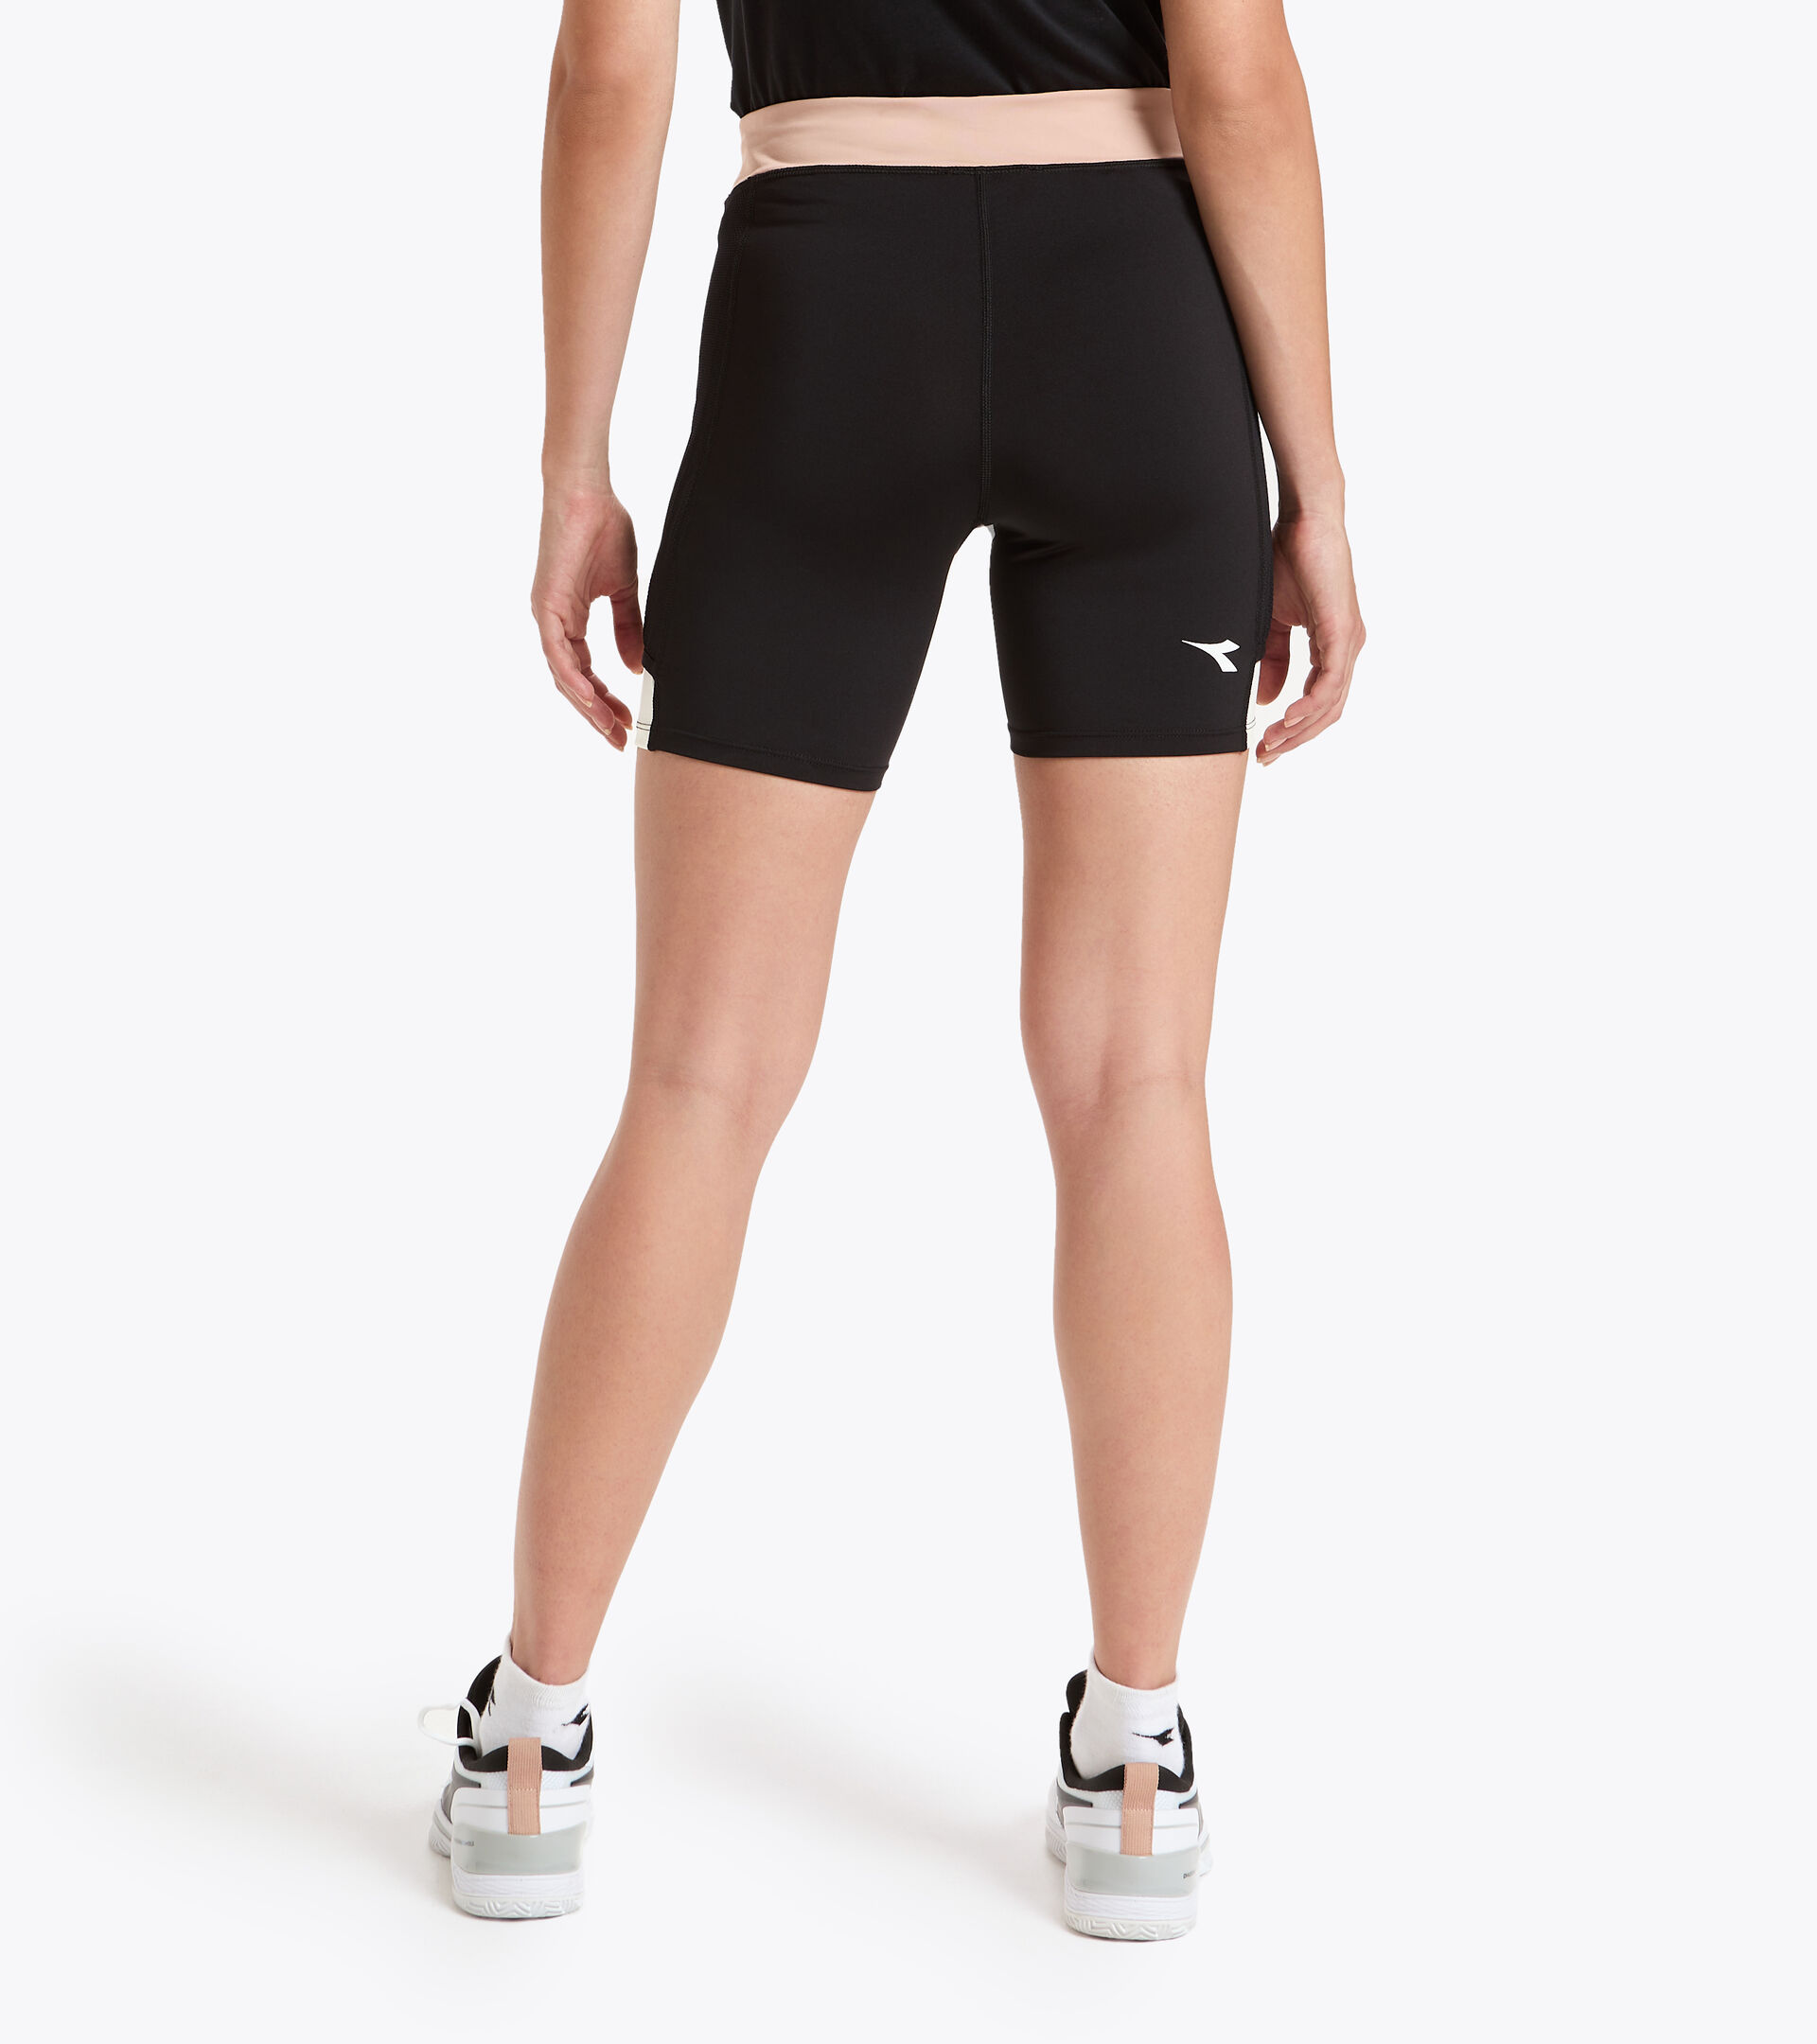 Tennis Shorts - Women L. SHORT TIGHTS POCKET BLACK/MAHOGANY ROSE - Diadora